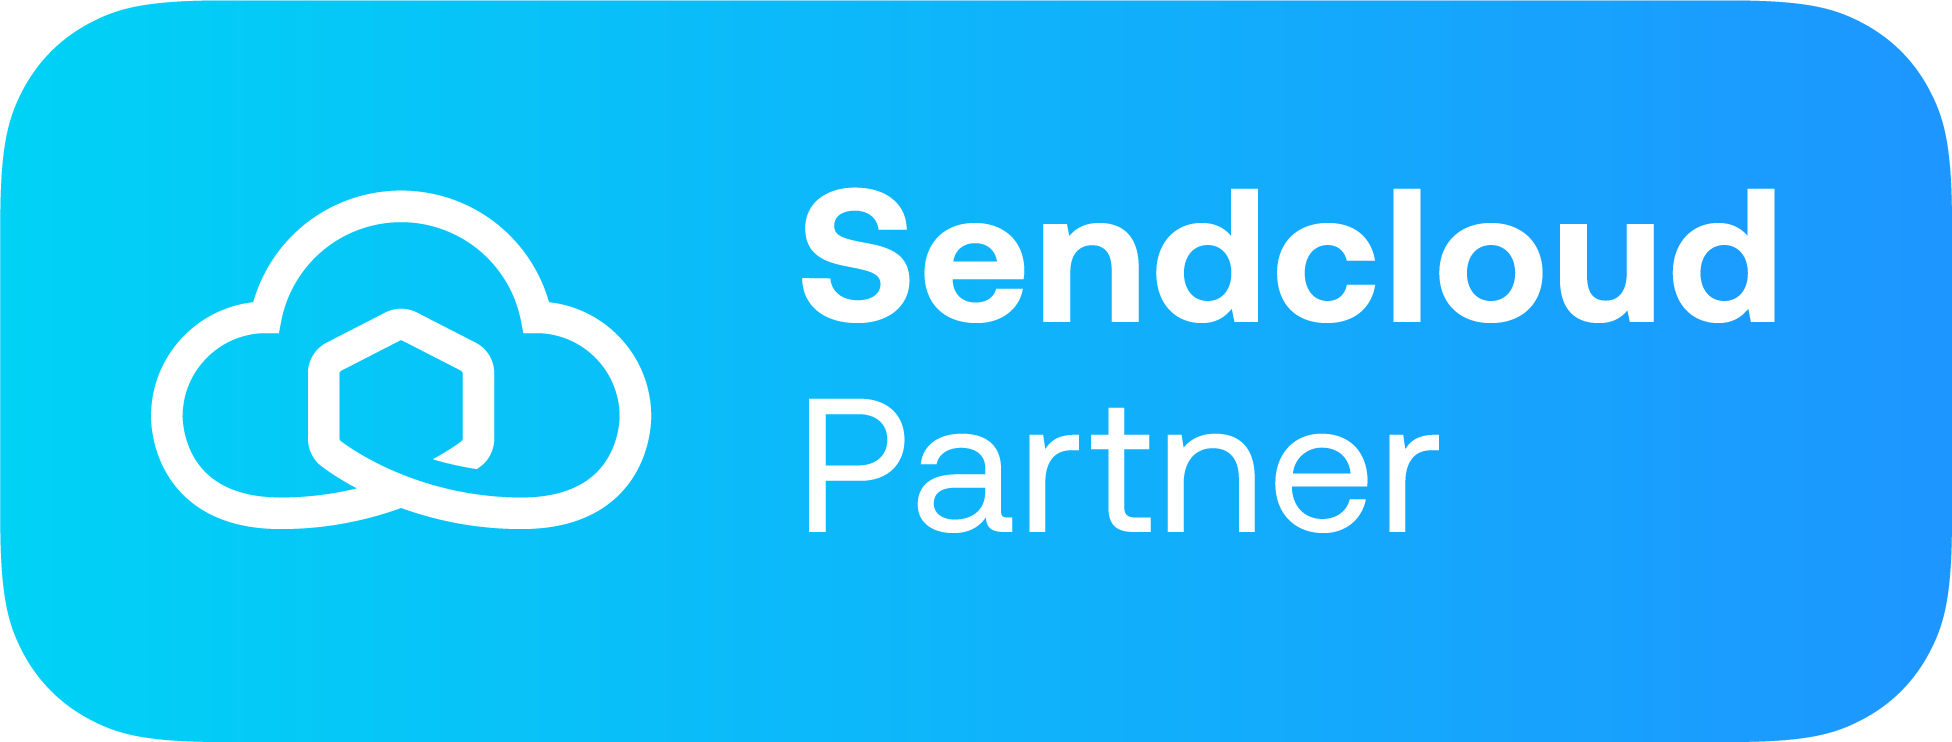 Sendcloud partner logo